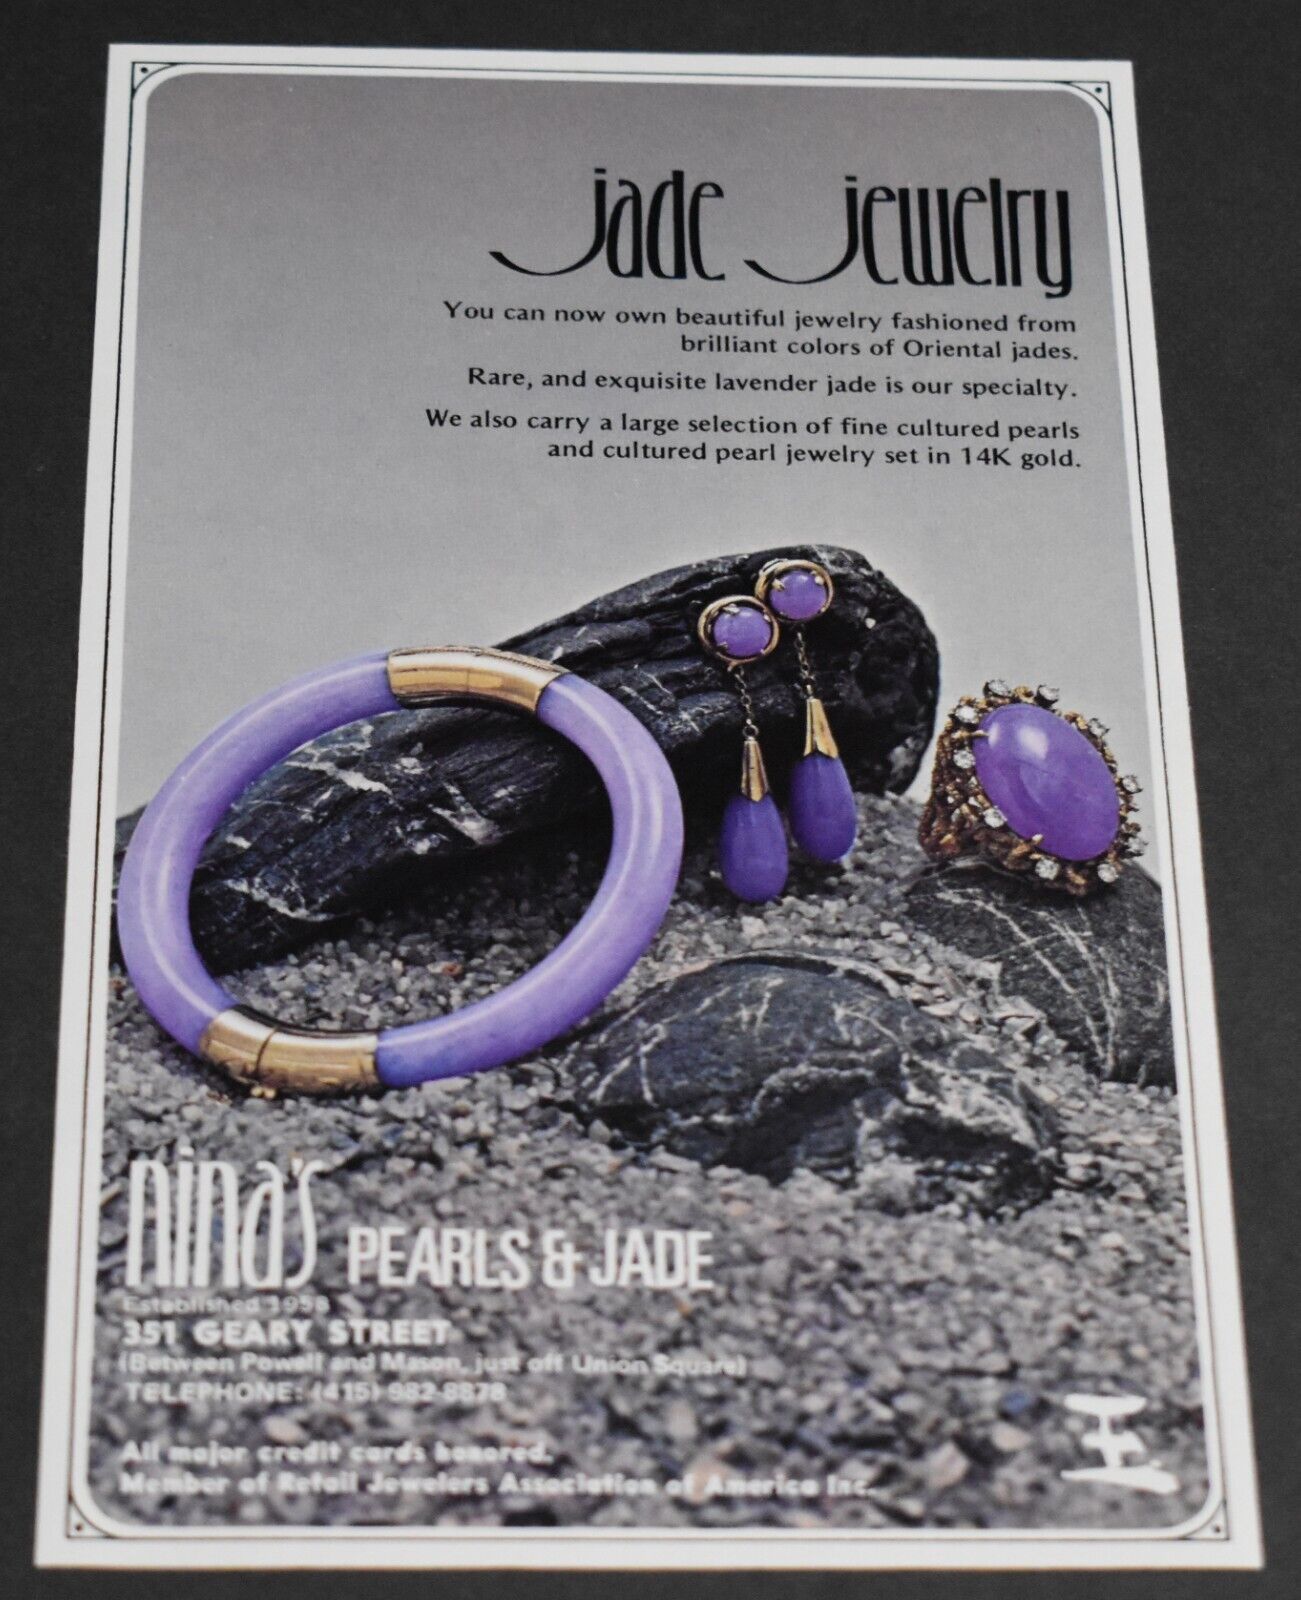 1979 Print Ad San Francisco Jade Jewelry  Nina\'s Pearls & Jade 351 Geary St art